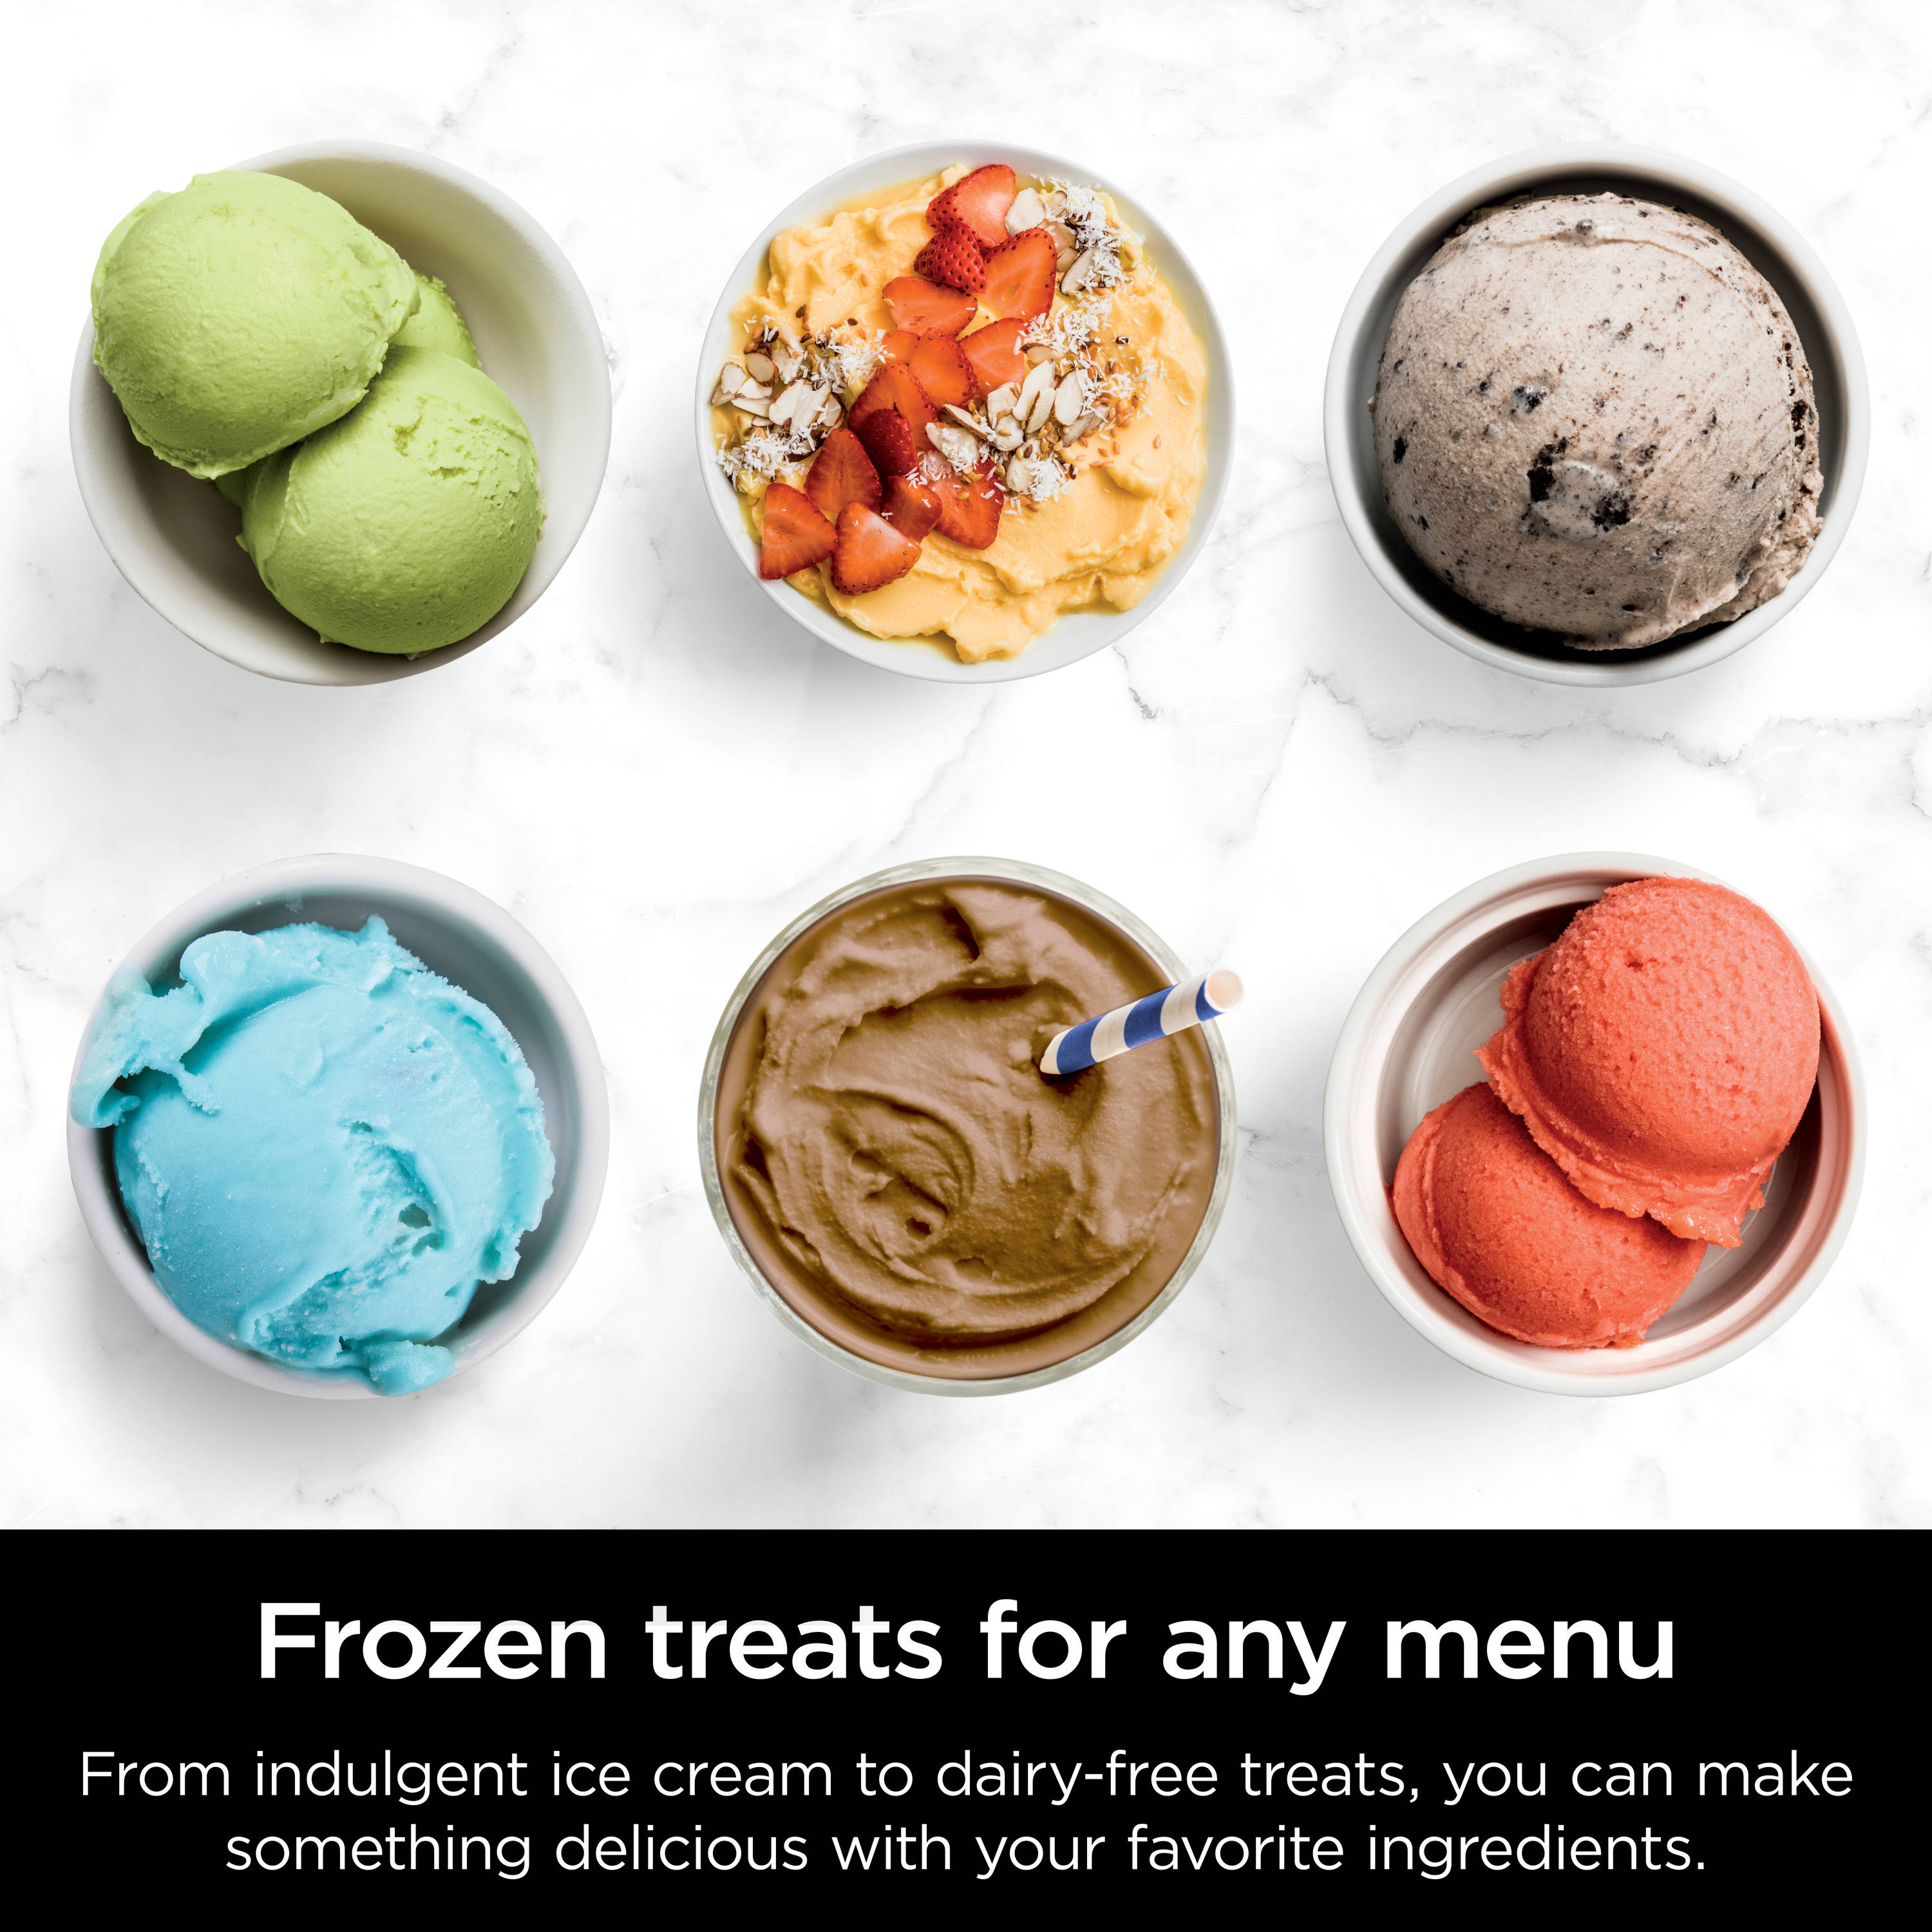 Ninja Creami Ice Cream Maker, Ice Cream & Dessert Makers, Furniture &  Appliances